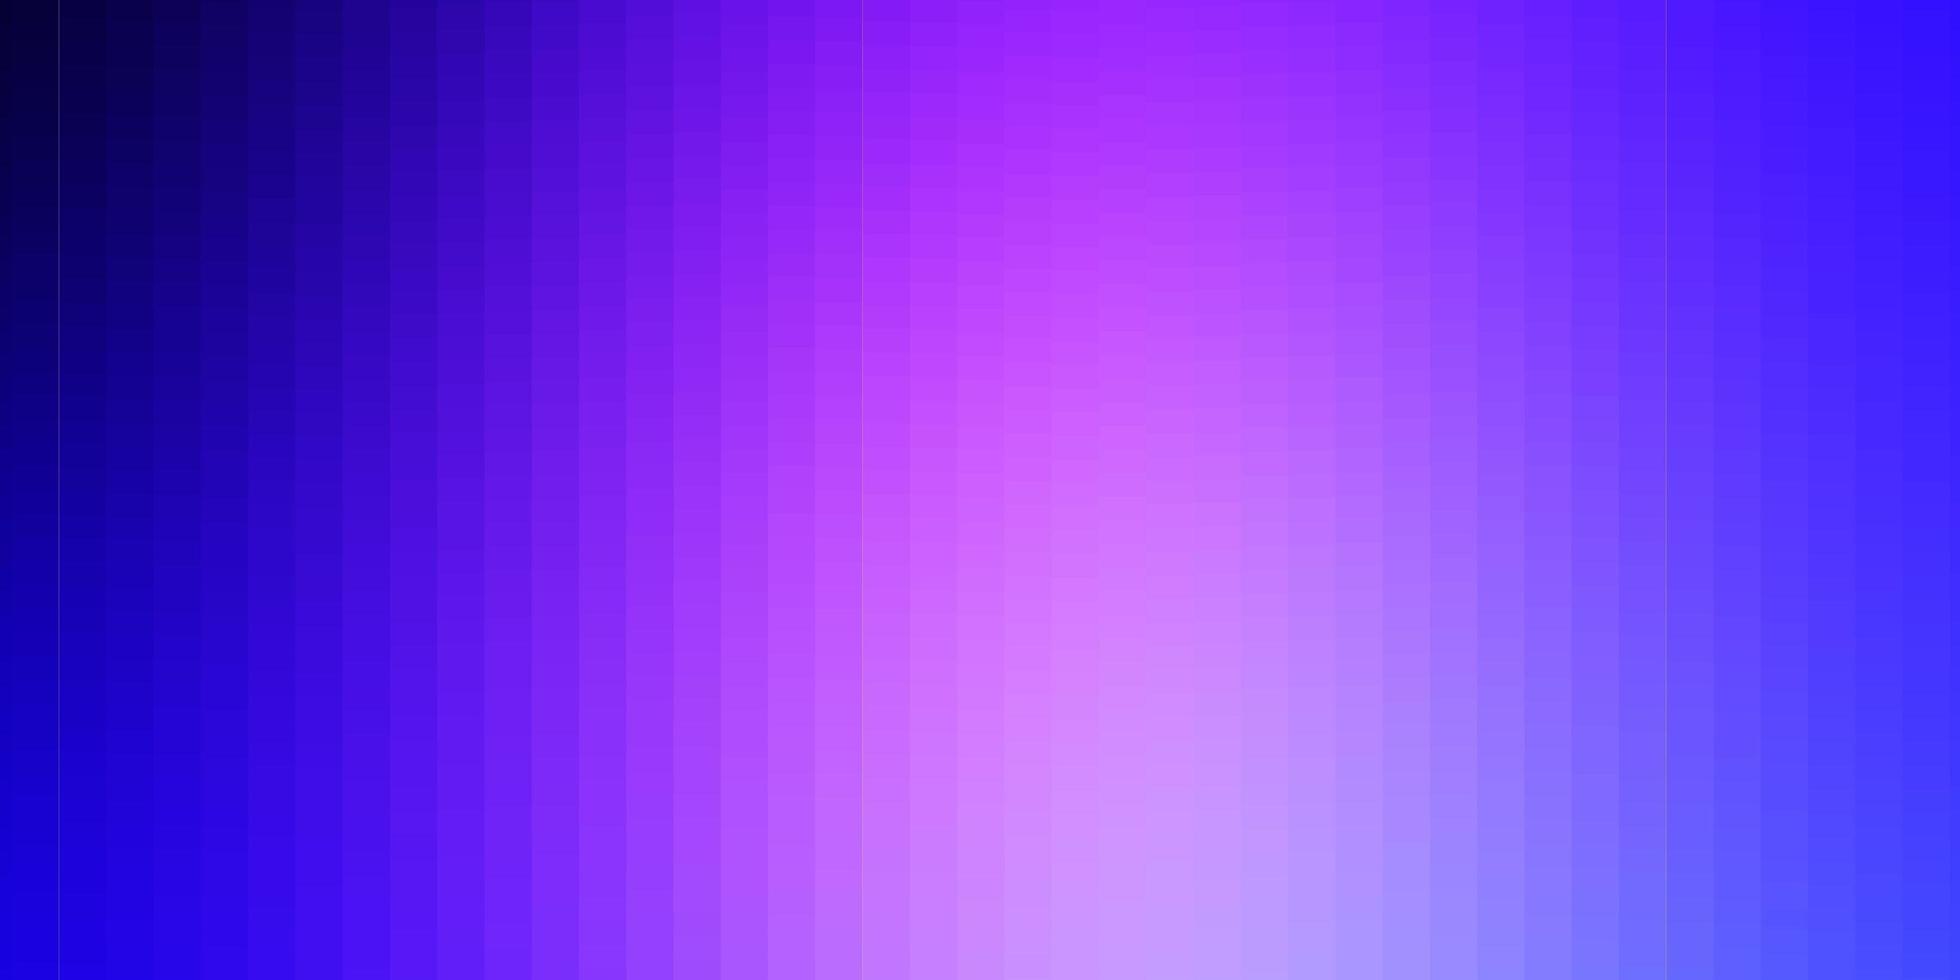 Telón de fondo de vector rosa claro, azul con rectángulos.